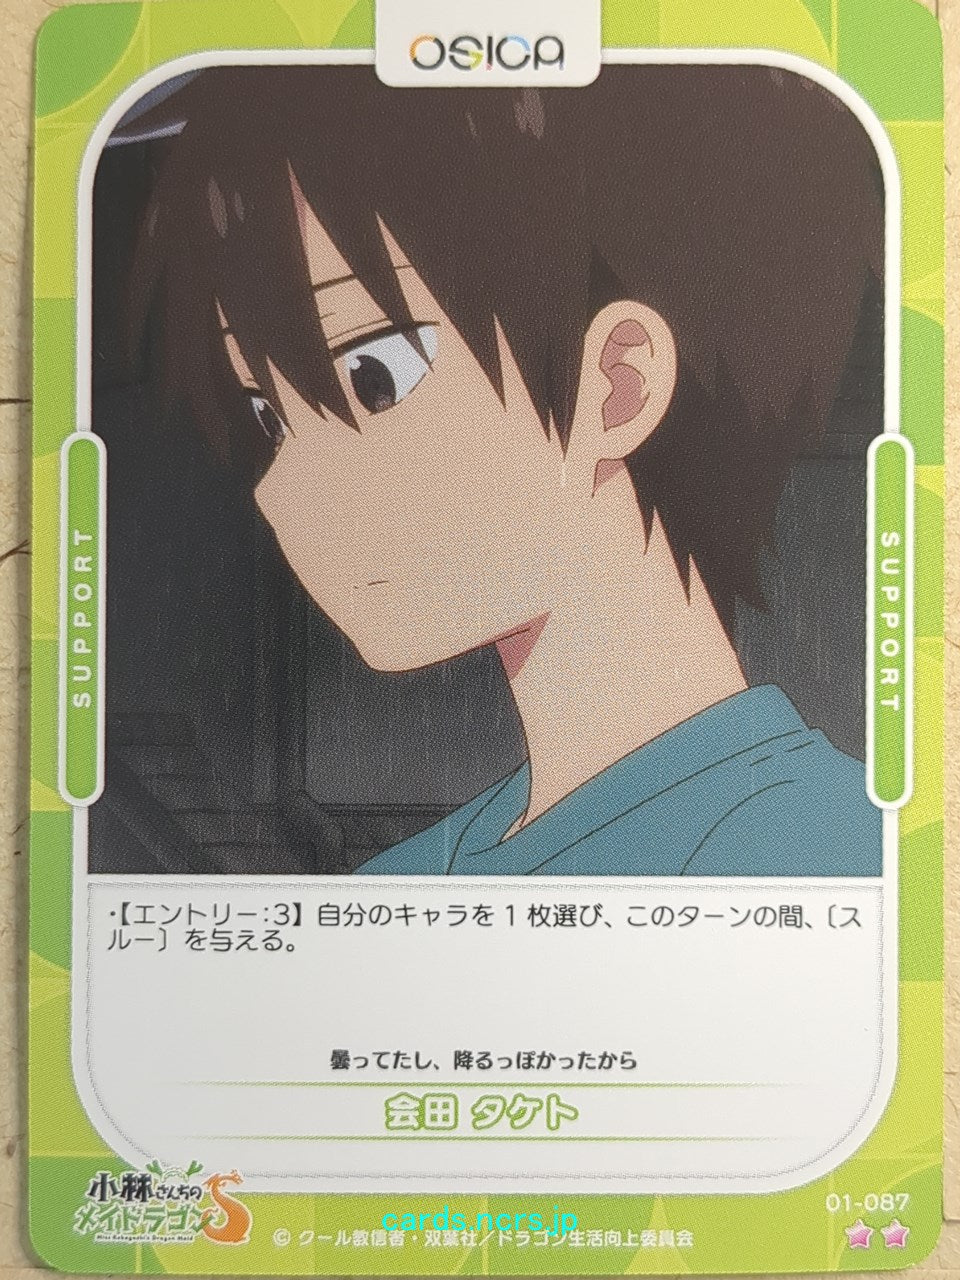 OSICA Miss Kobayashi's Dragon Maid -Taketo Aida-   Trading Card OS/KOB-01-087